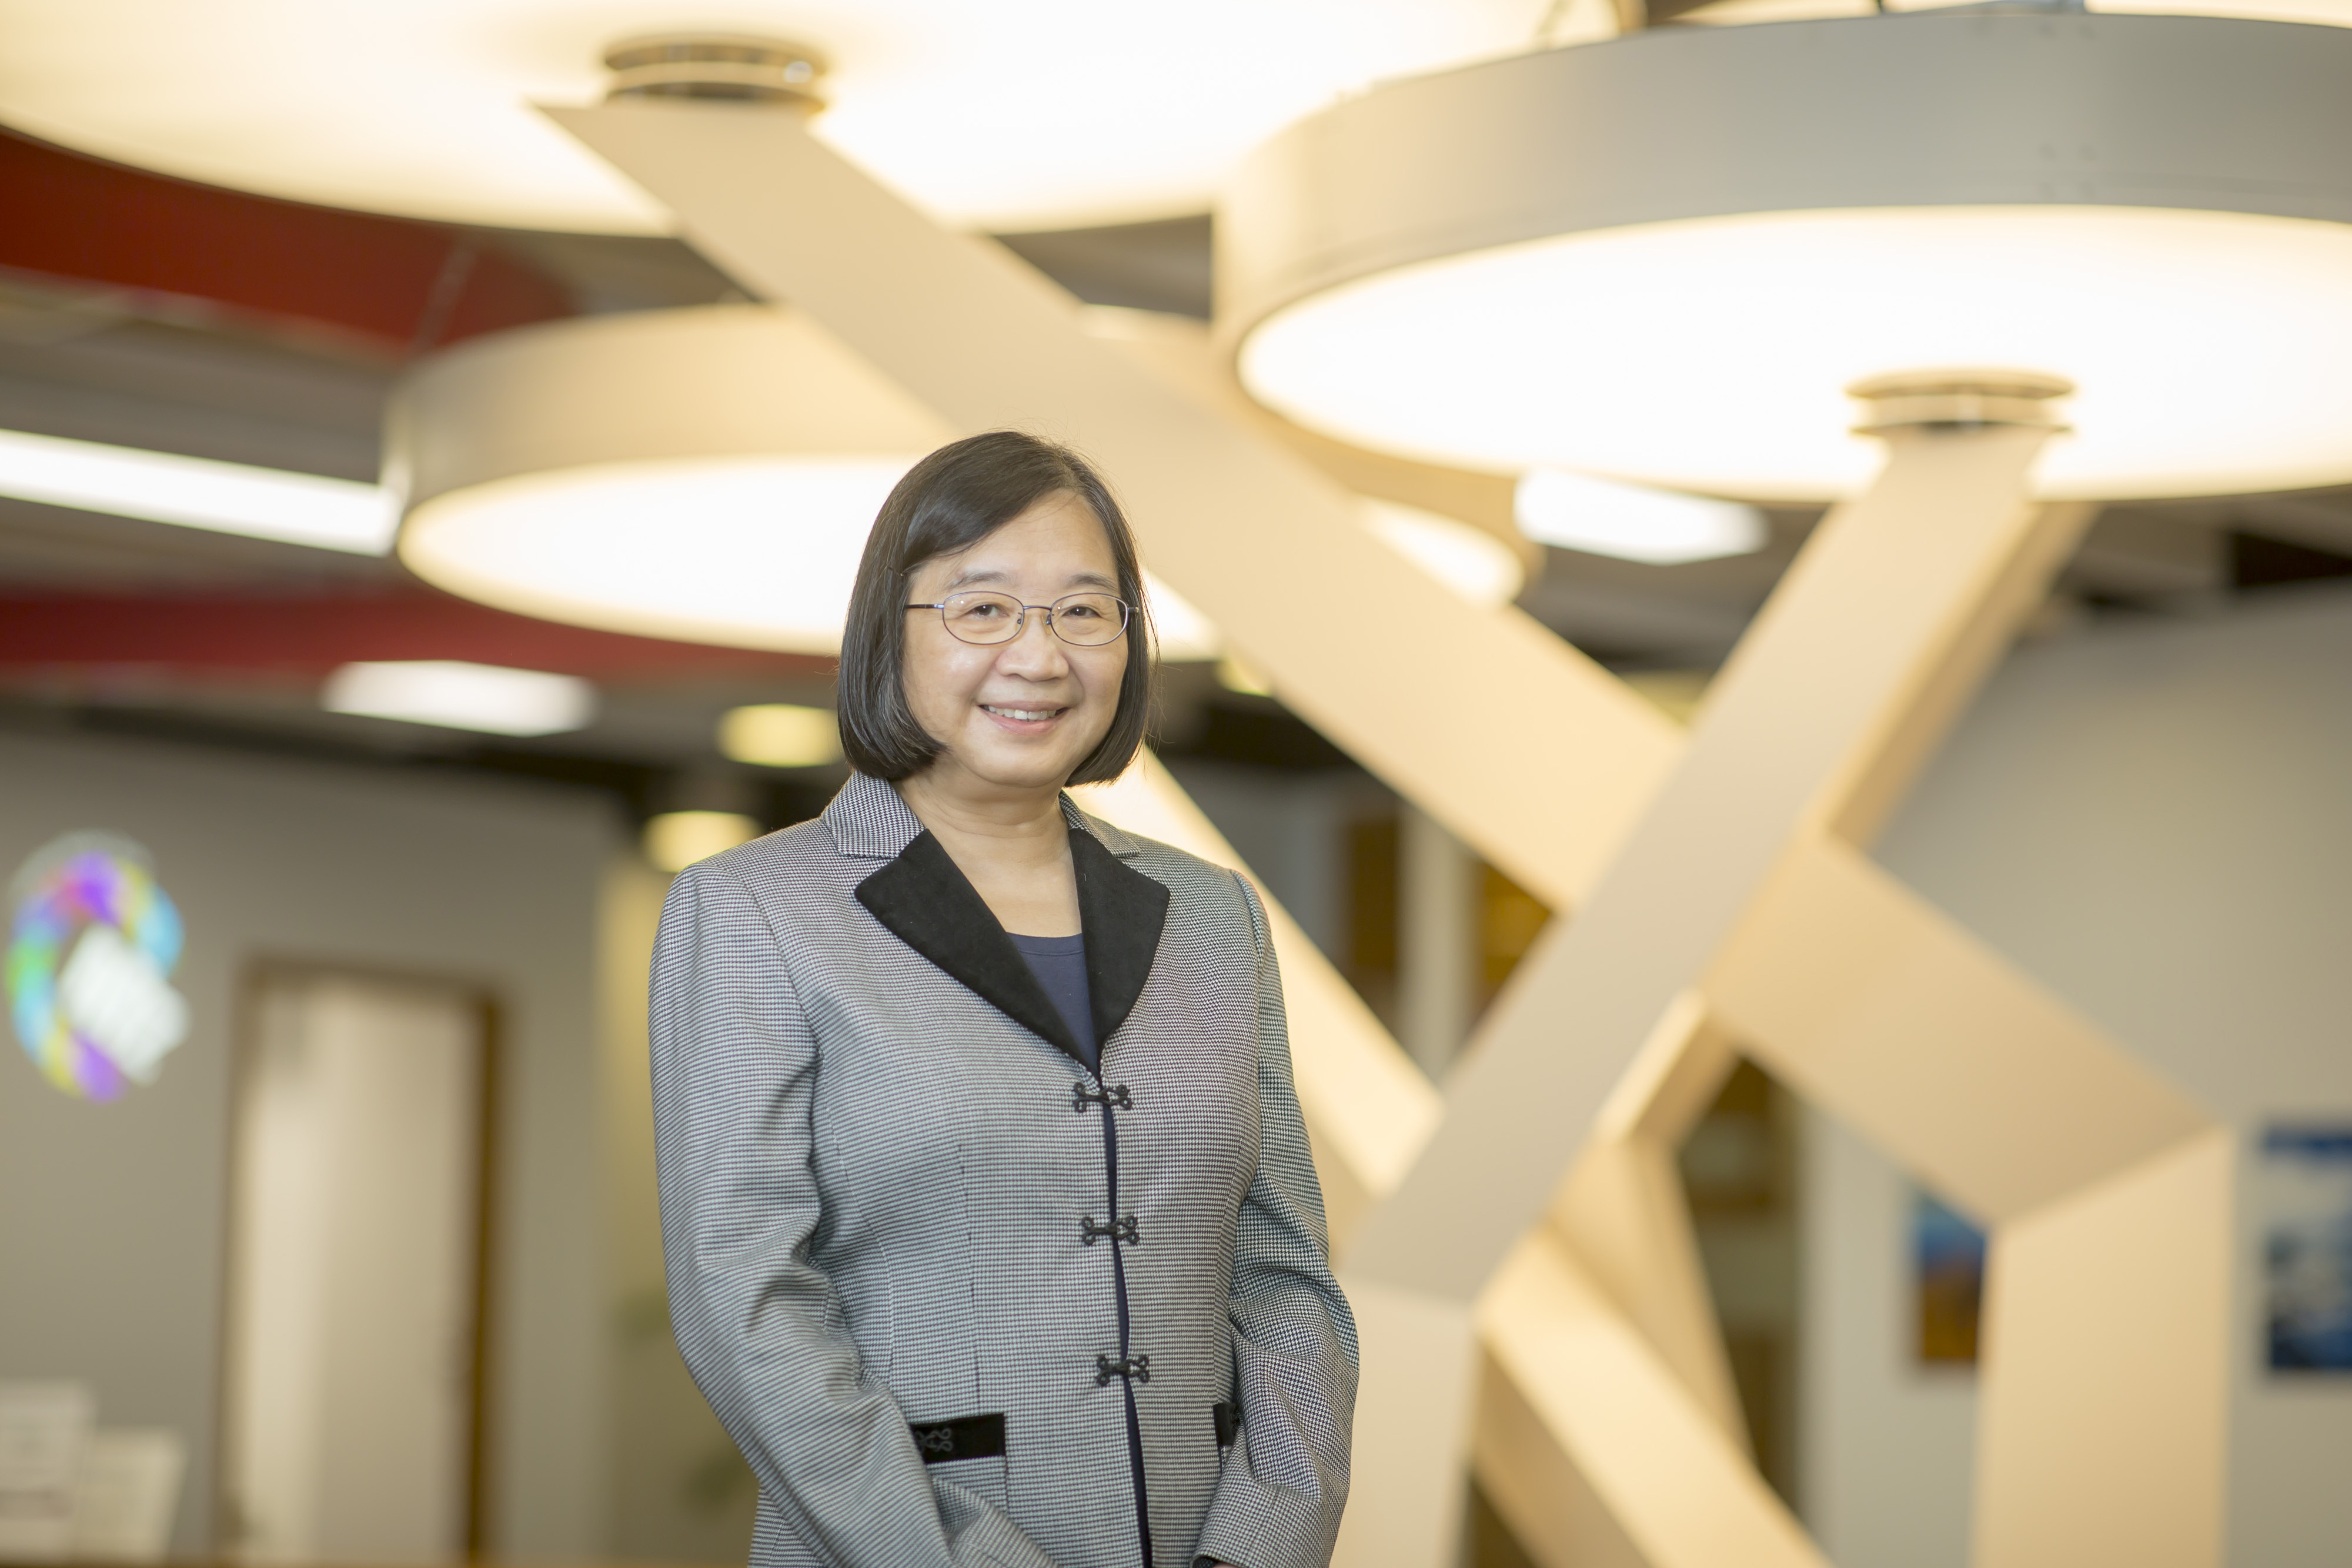 Prof. Lau Kei May